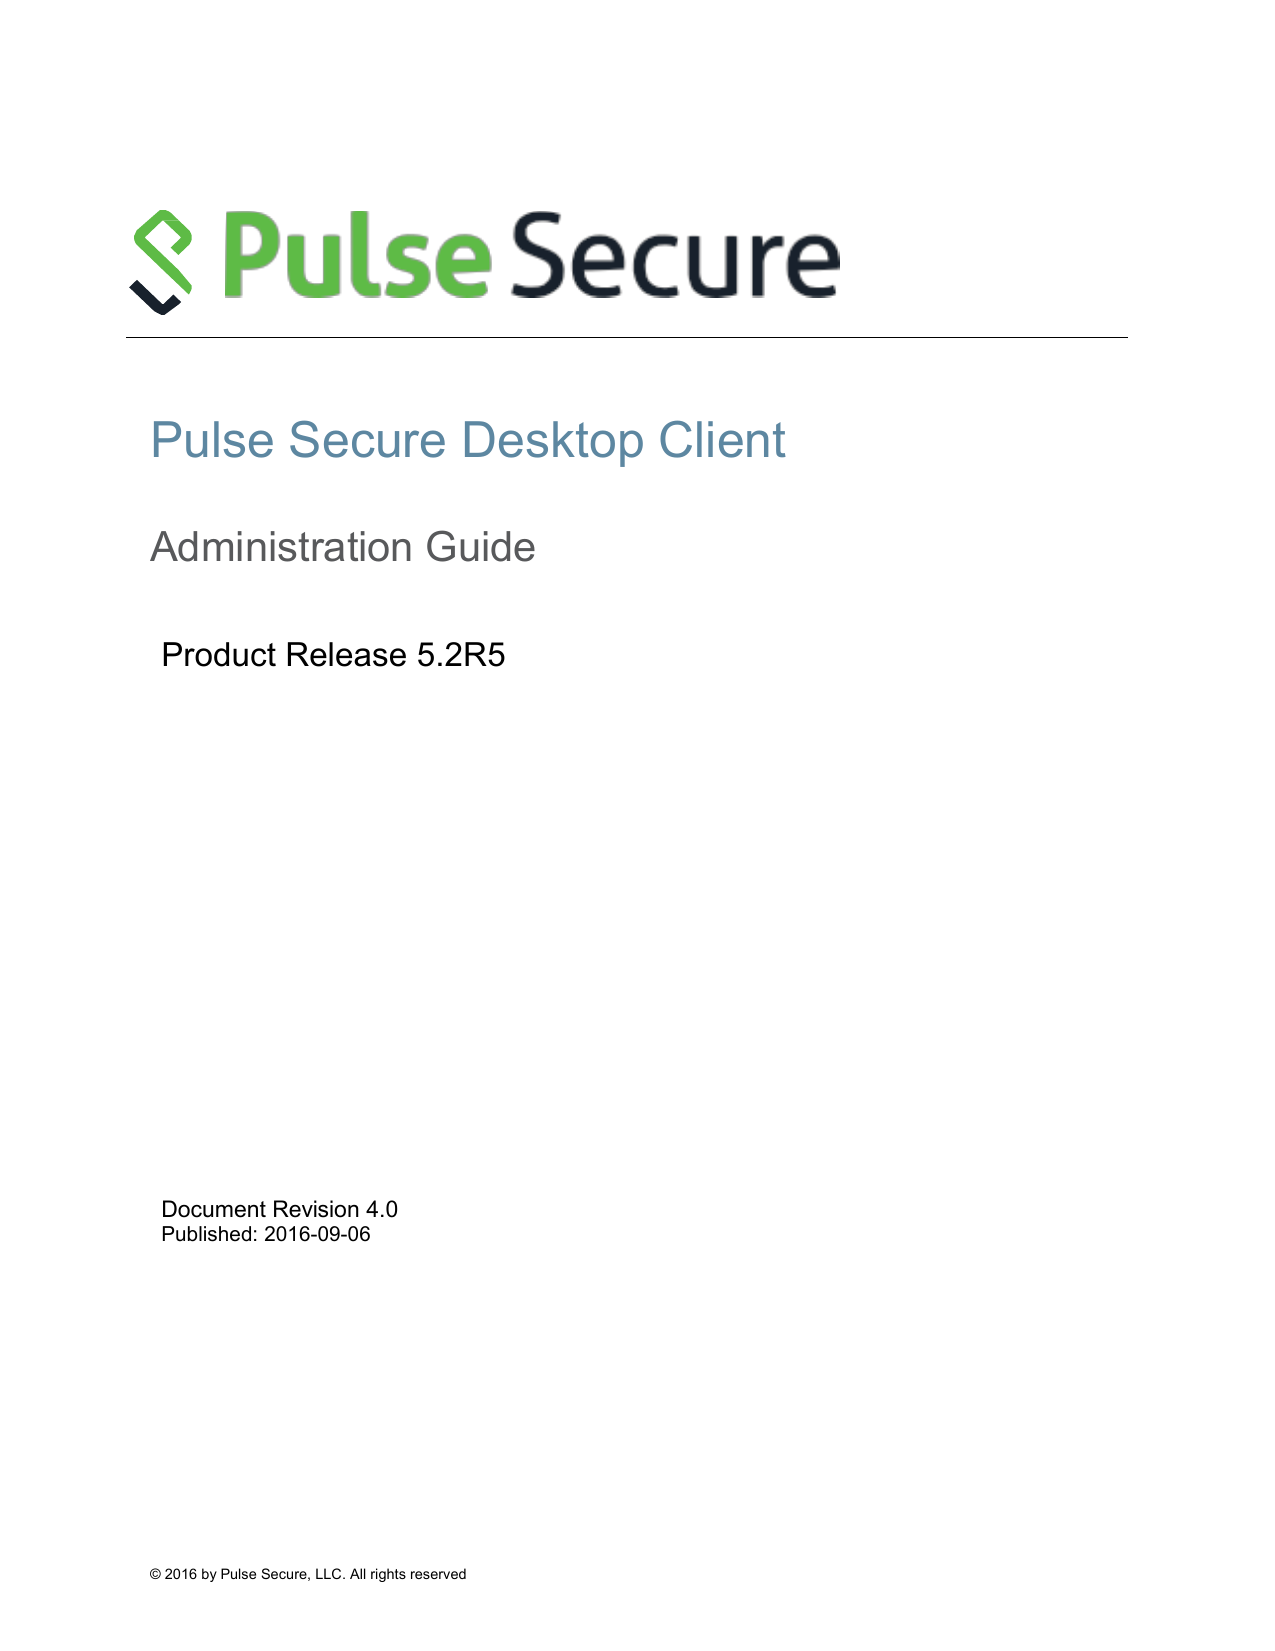 pulse secure llc